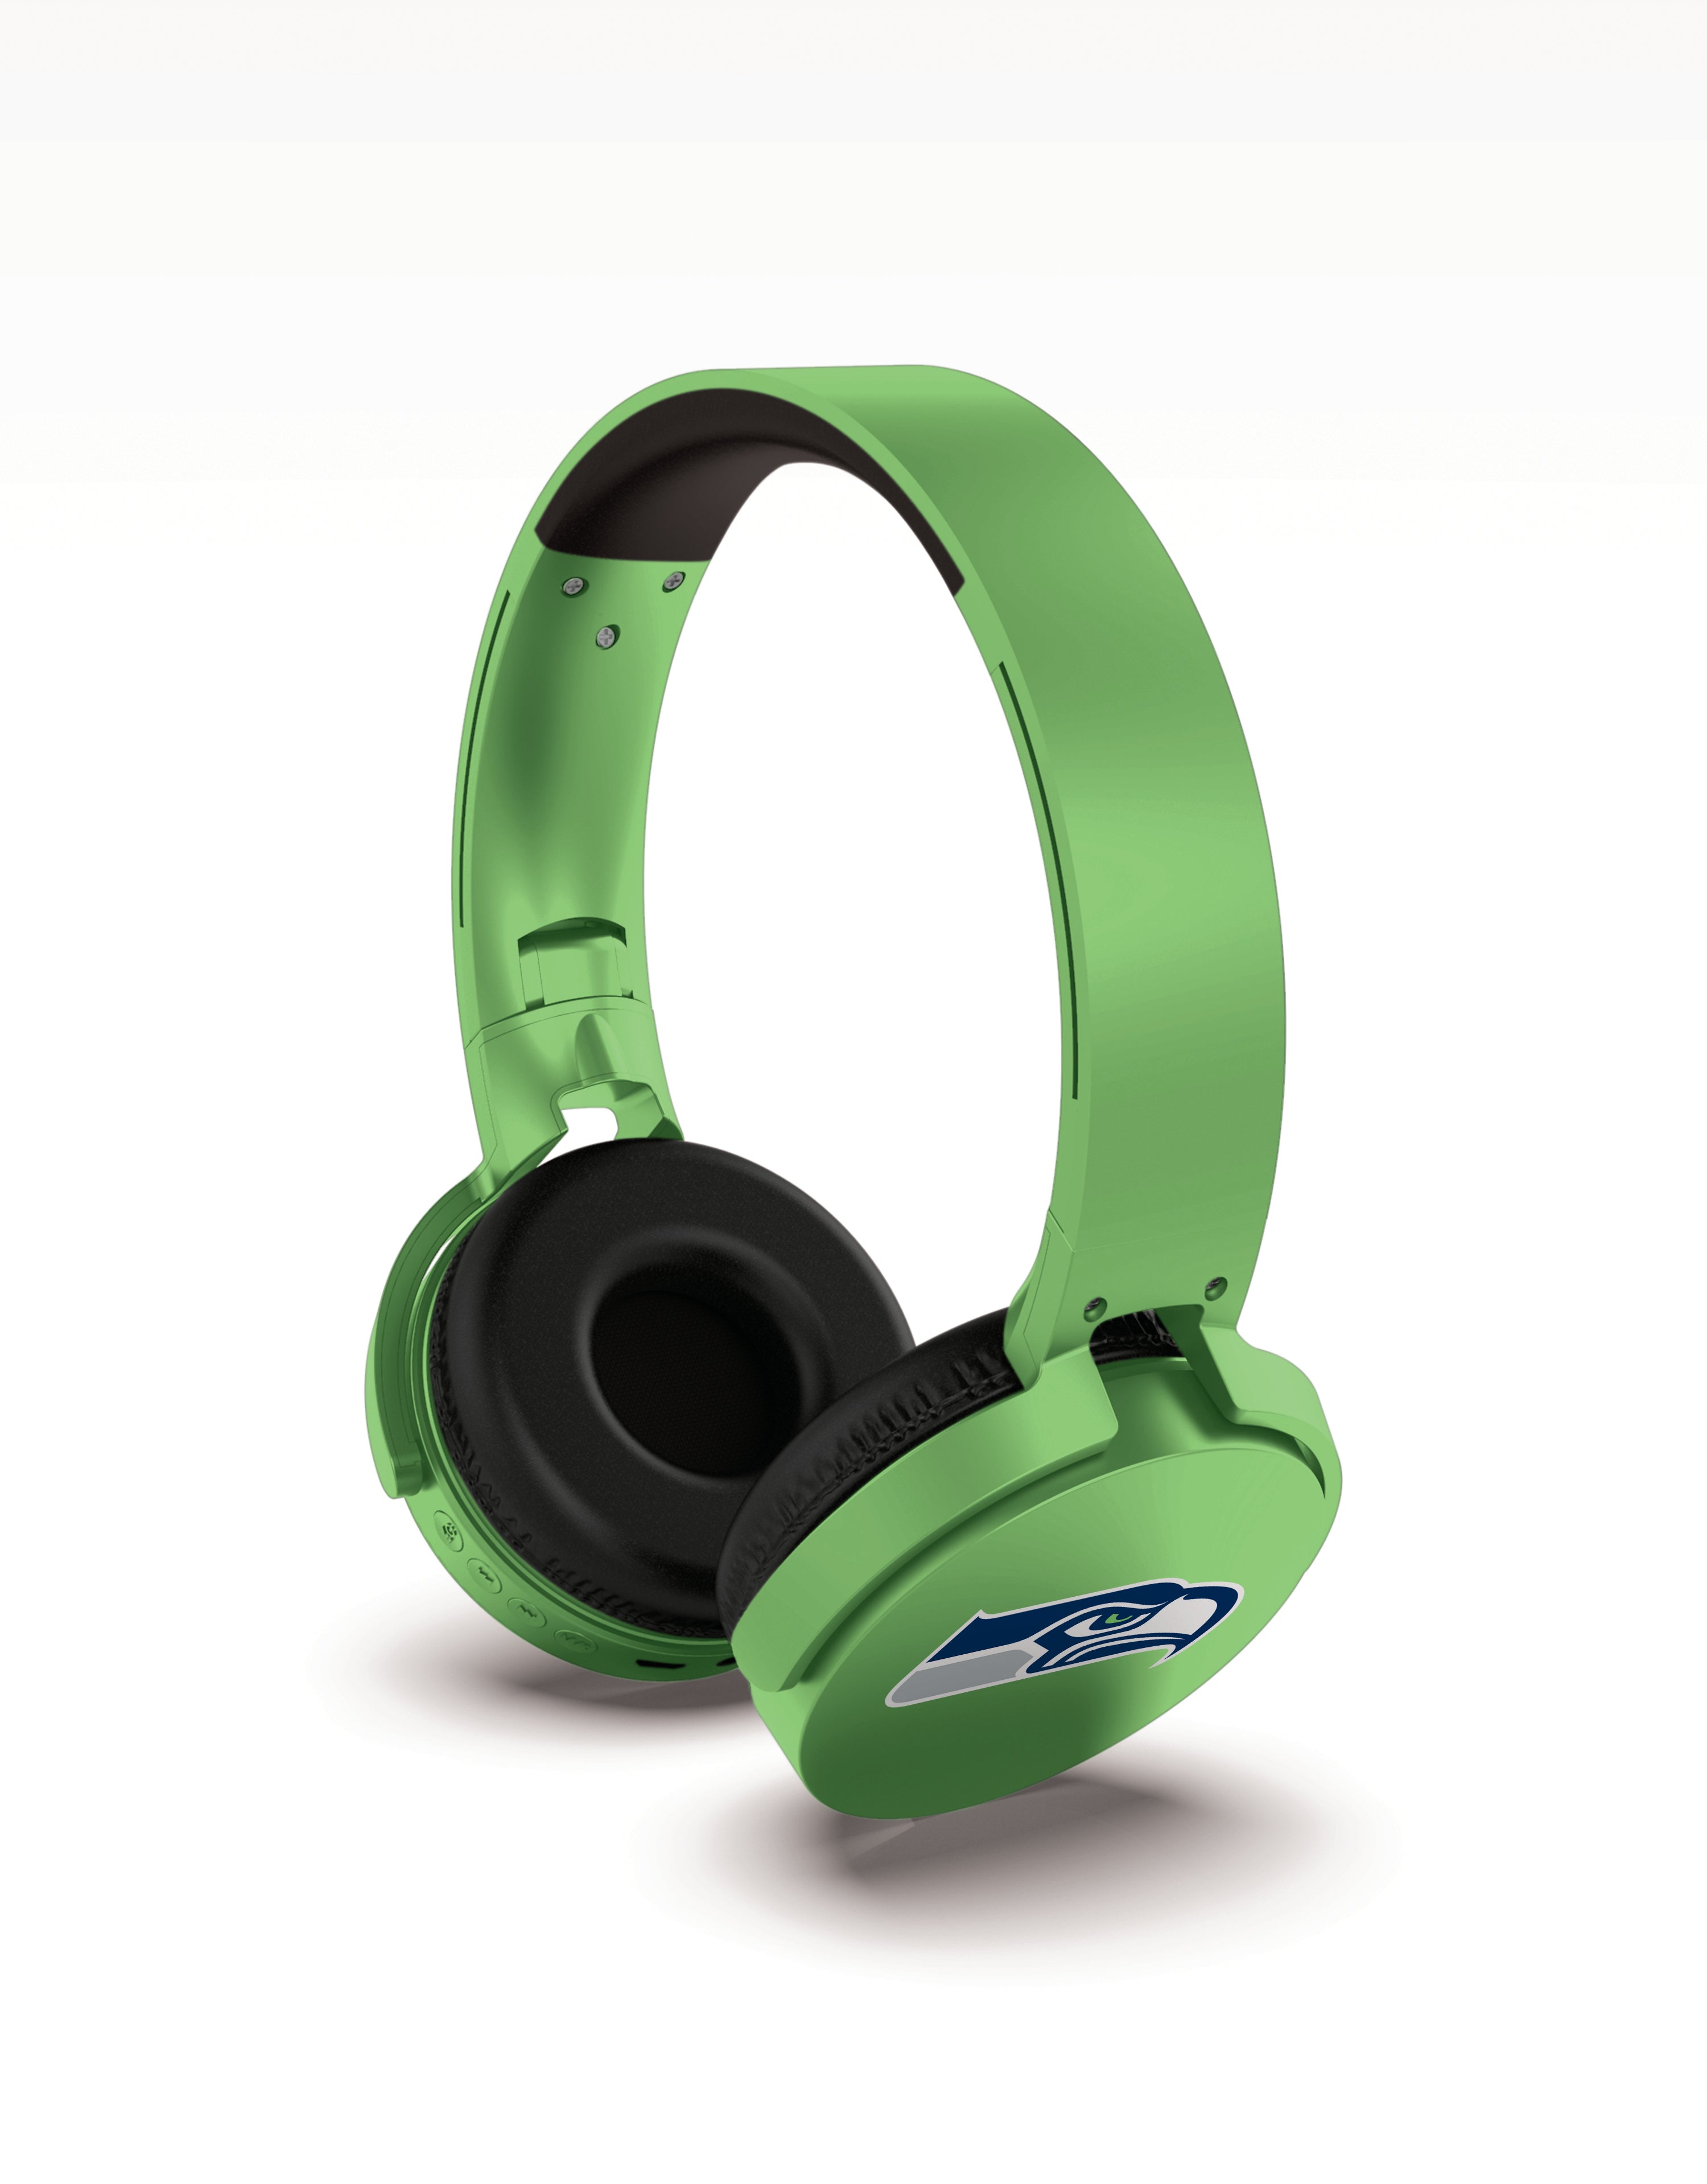 NFL Wireless Bluetooth Headphones